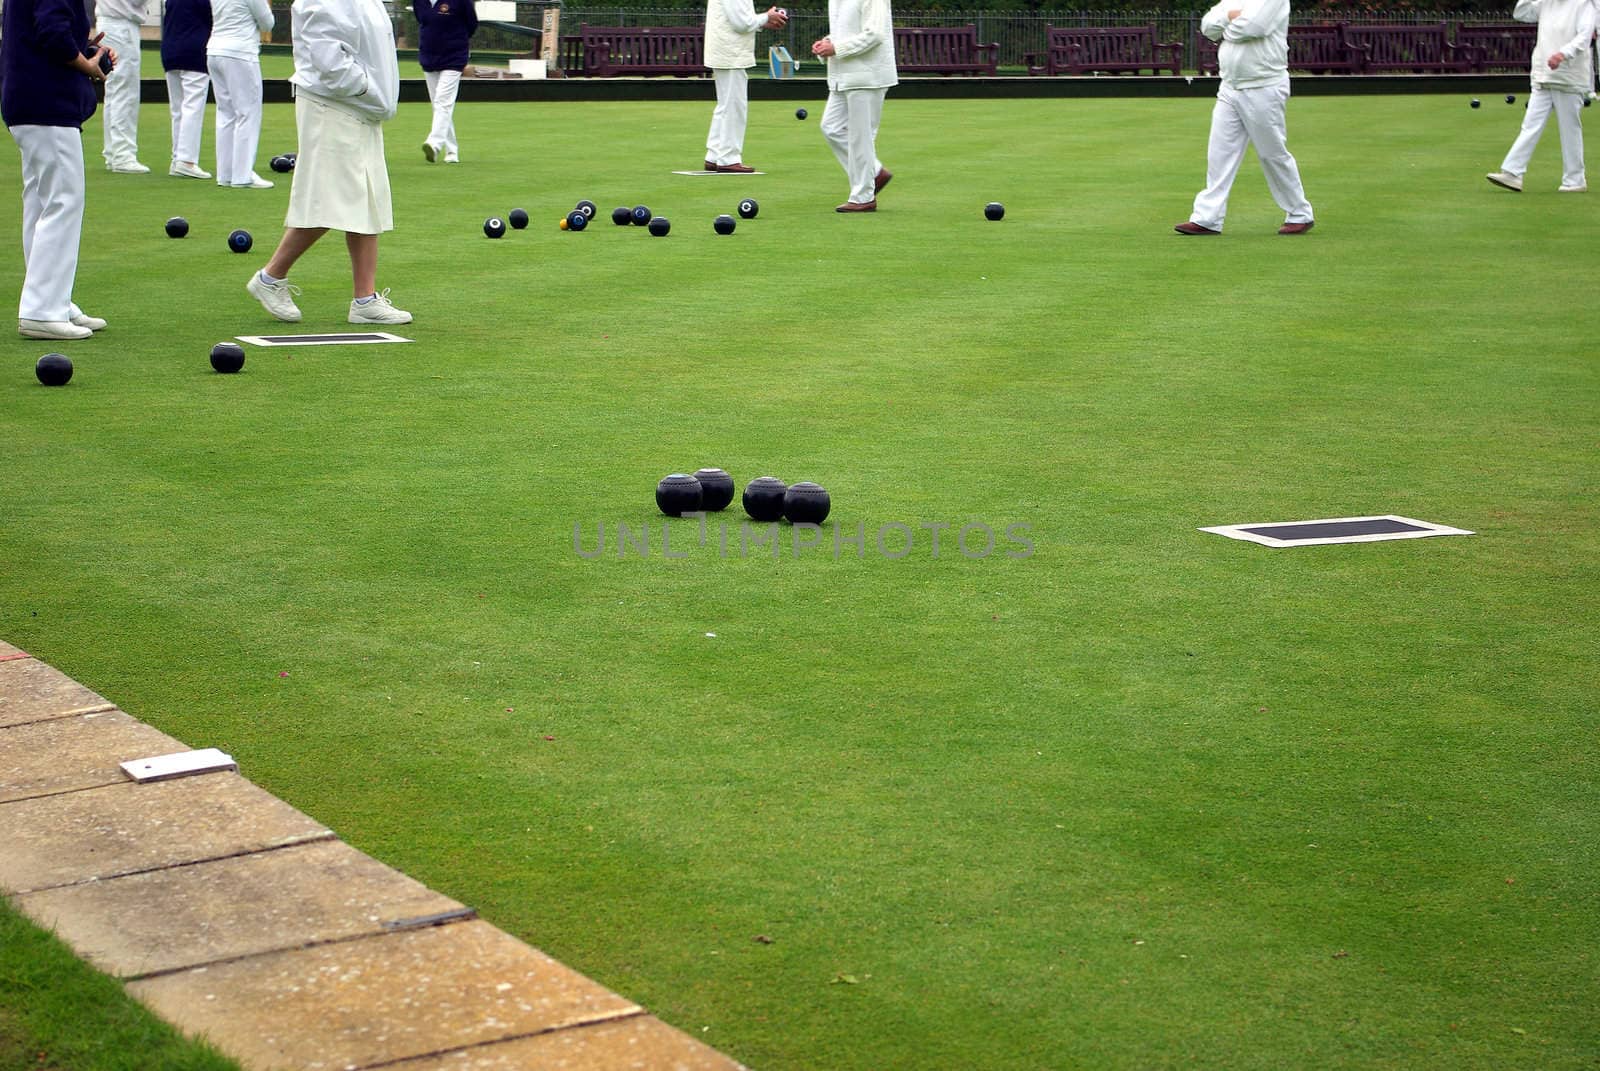 Photo showing senior people playing lawn bowling